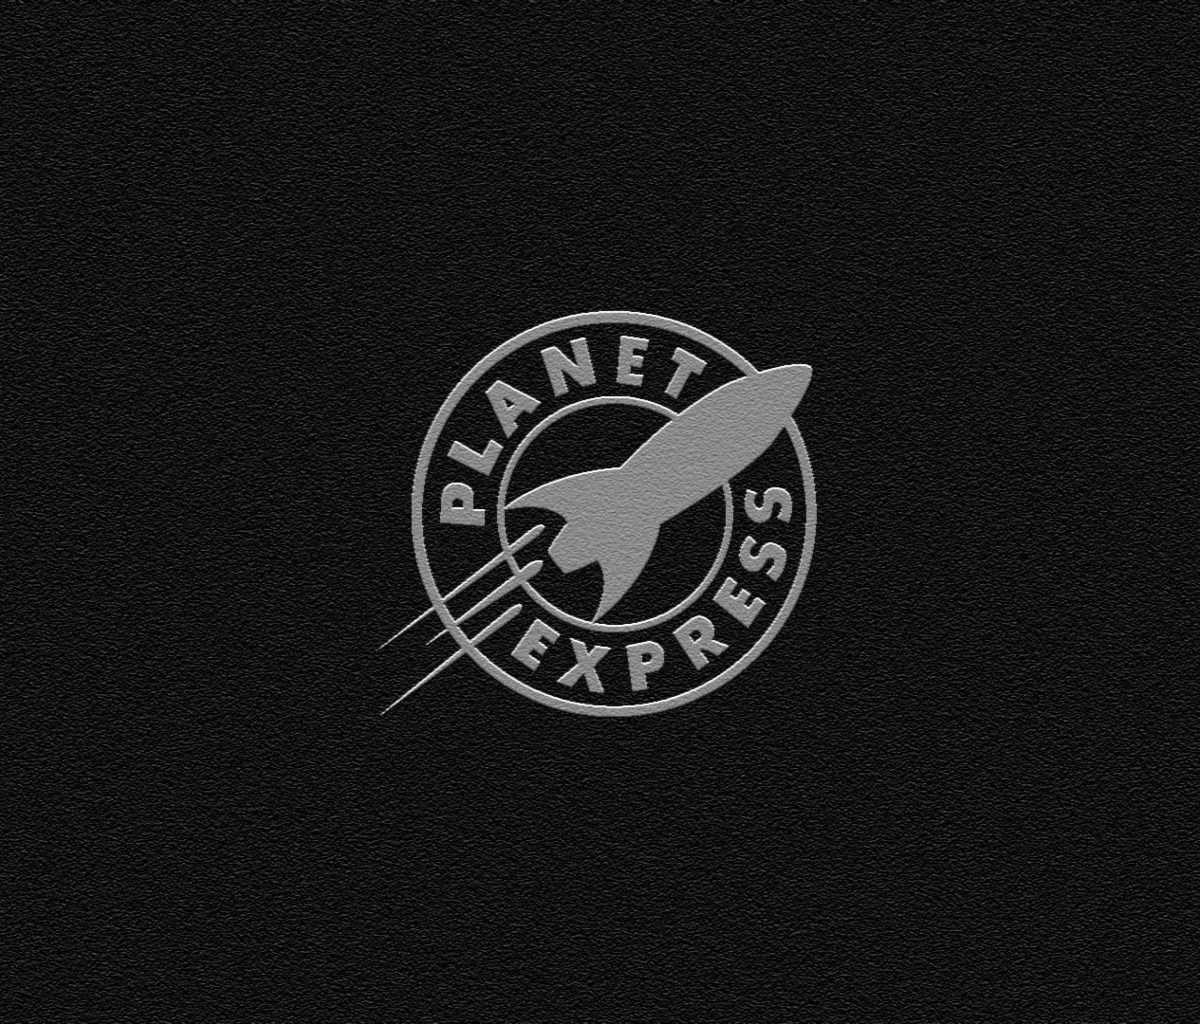 Planet Express wallpaper 1200x1024